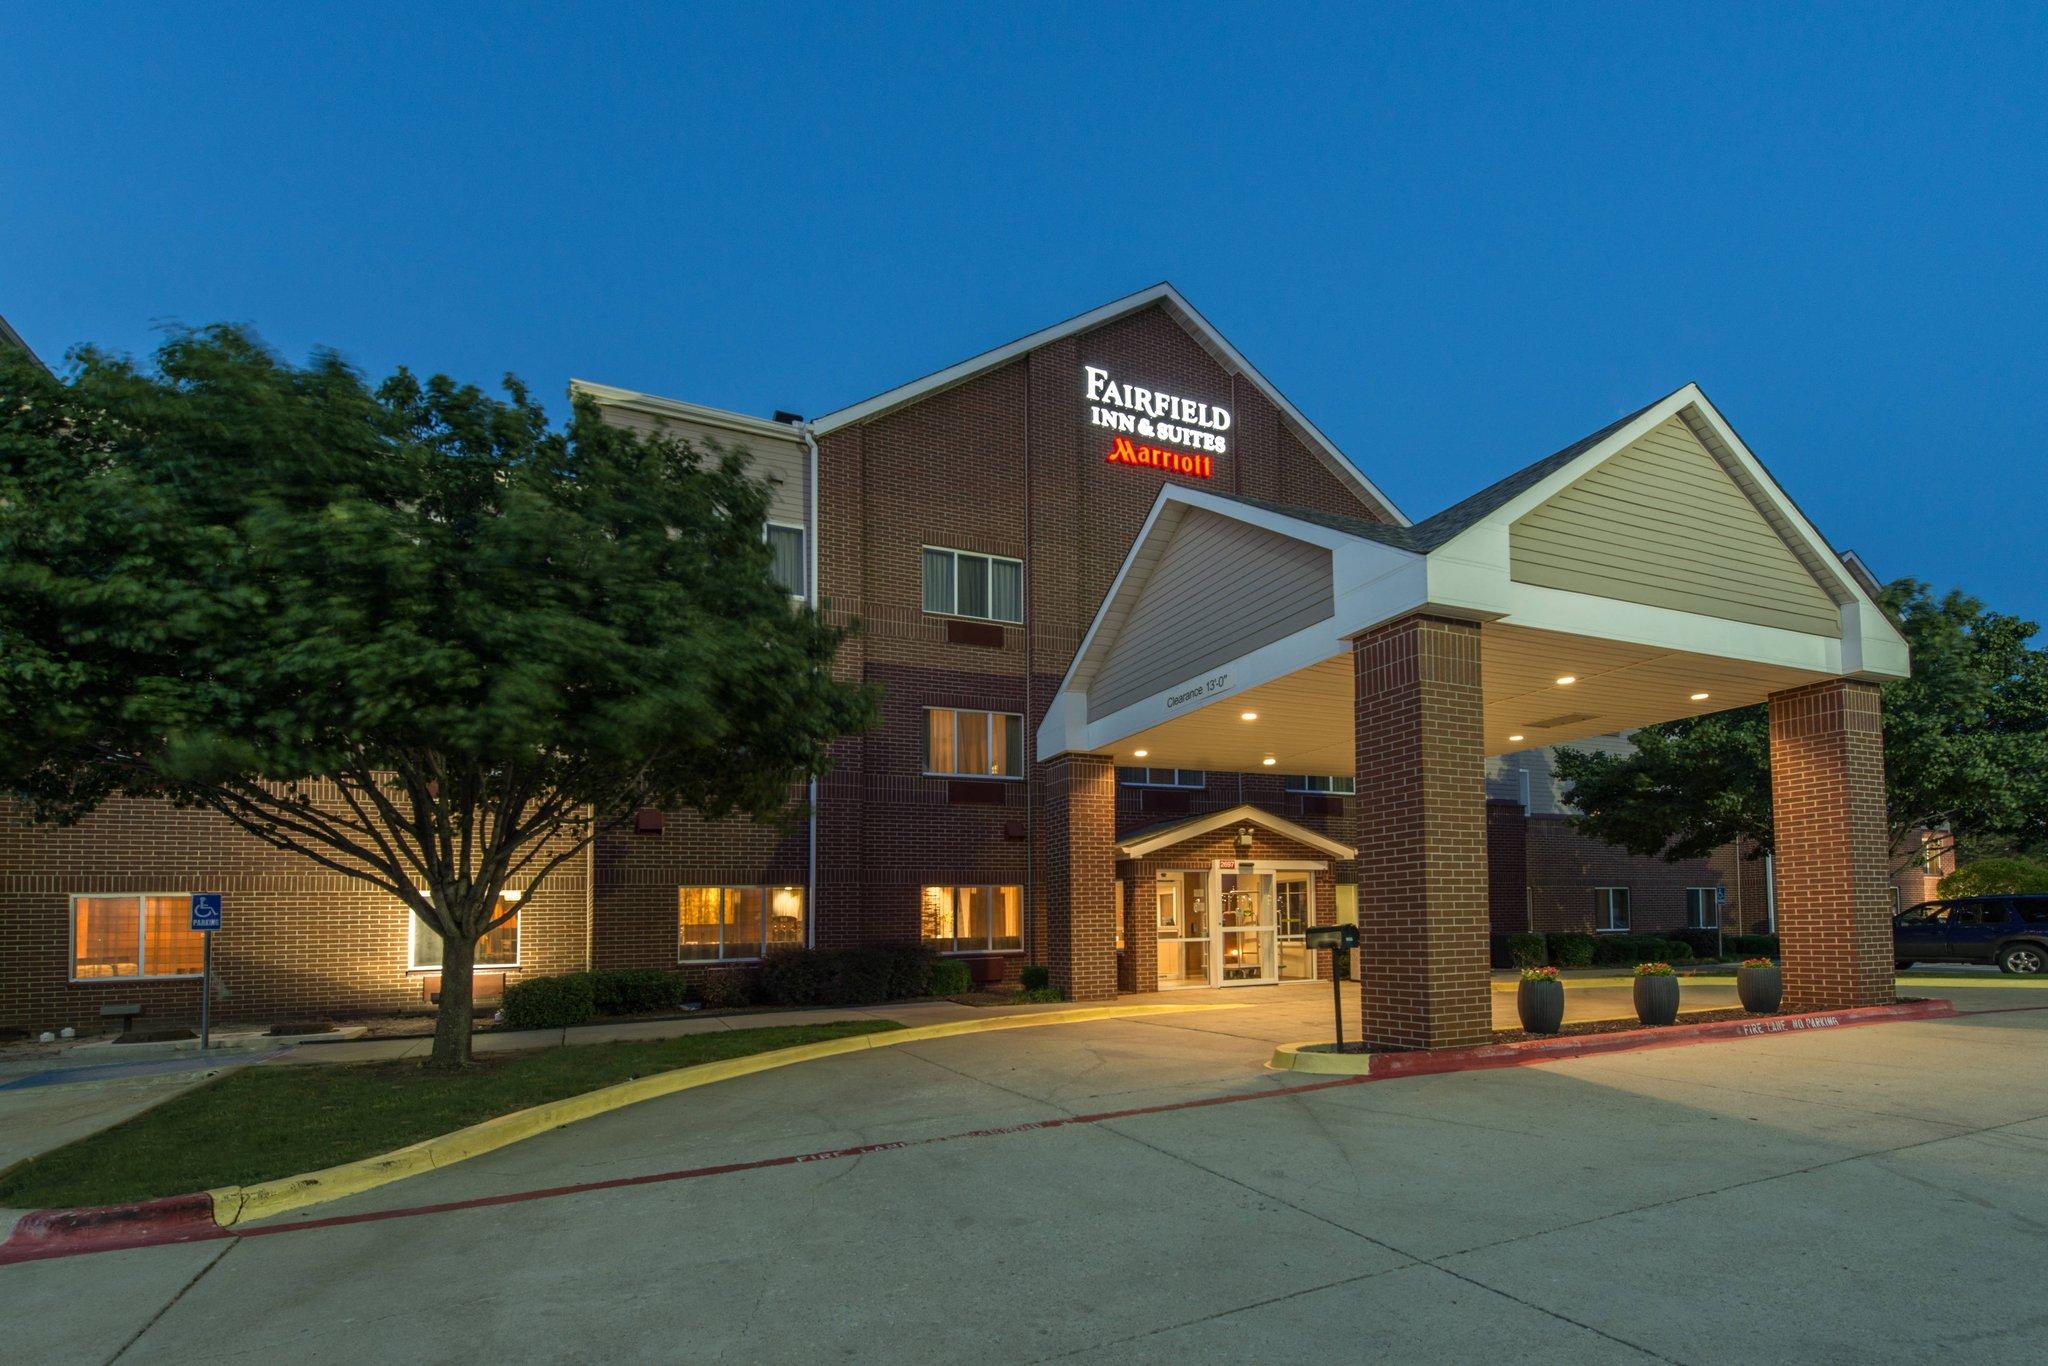 Fairfield Inn & Suites Dallas Lewisville in Lewisville, TX